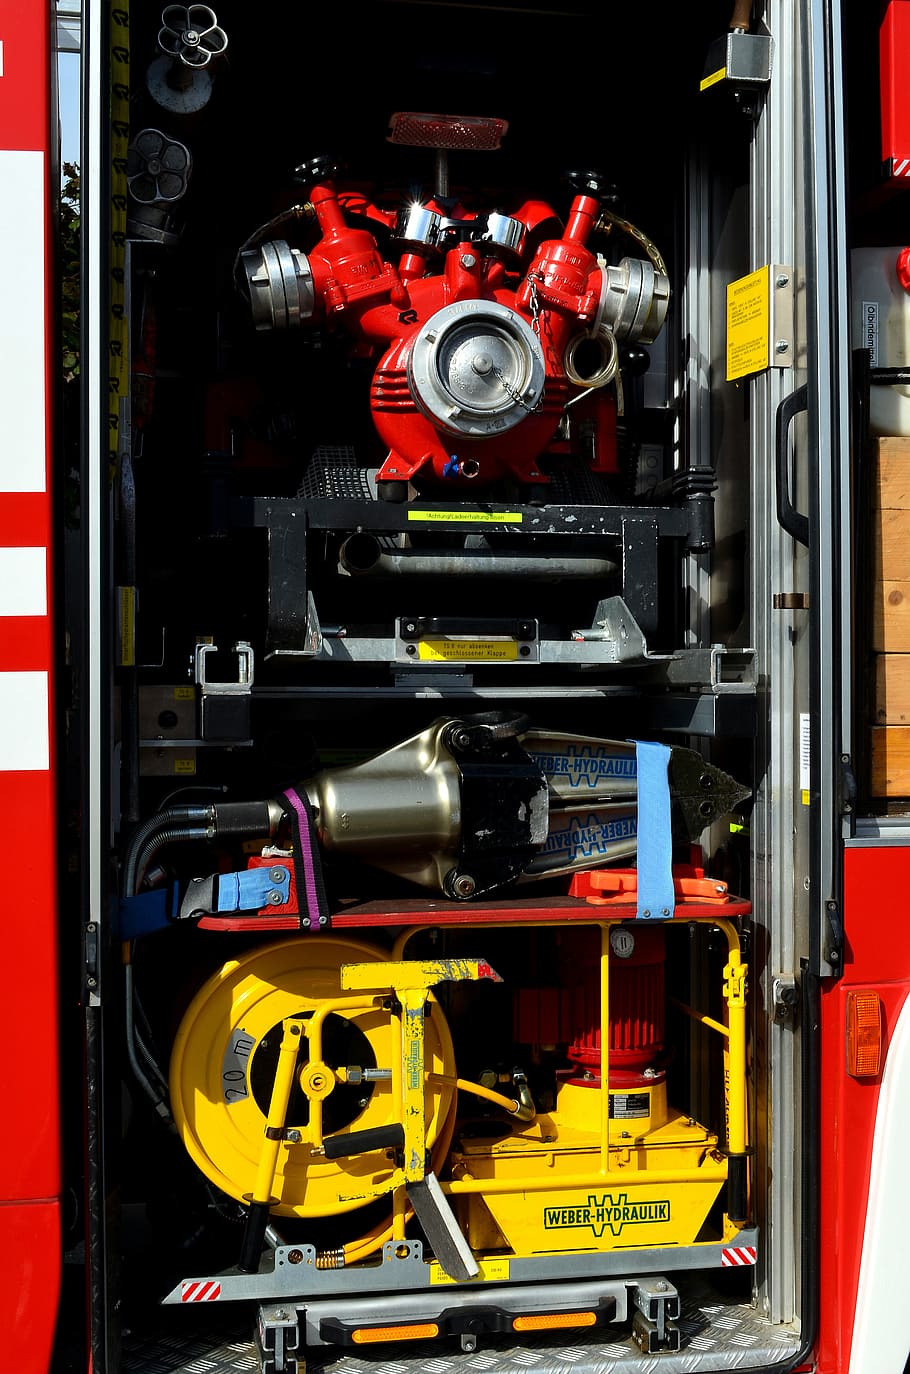 消防, 消防設備, 消防車, 消防署接続, 消防隊油圧スプレッダー, 車両, 工具, 油圧ポンプ, 技術, 機械